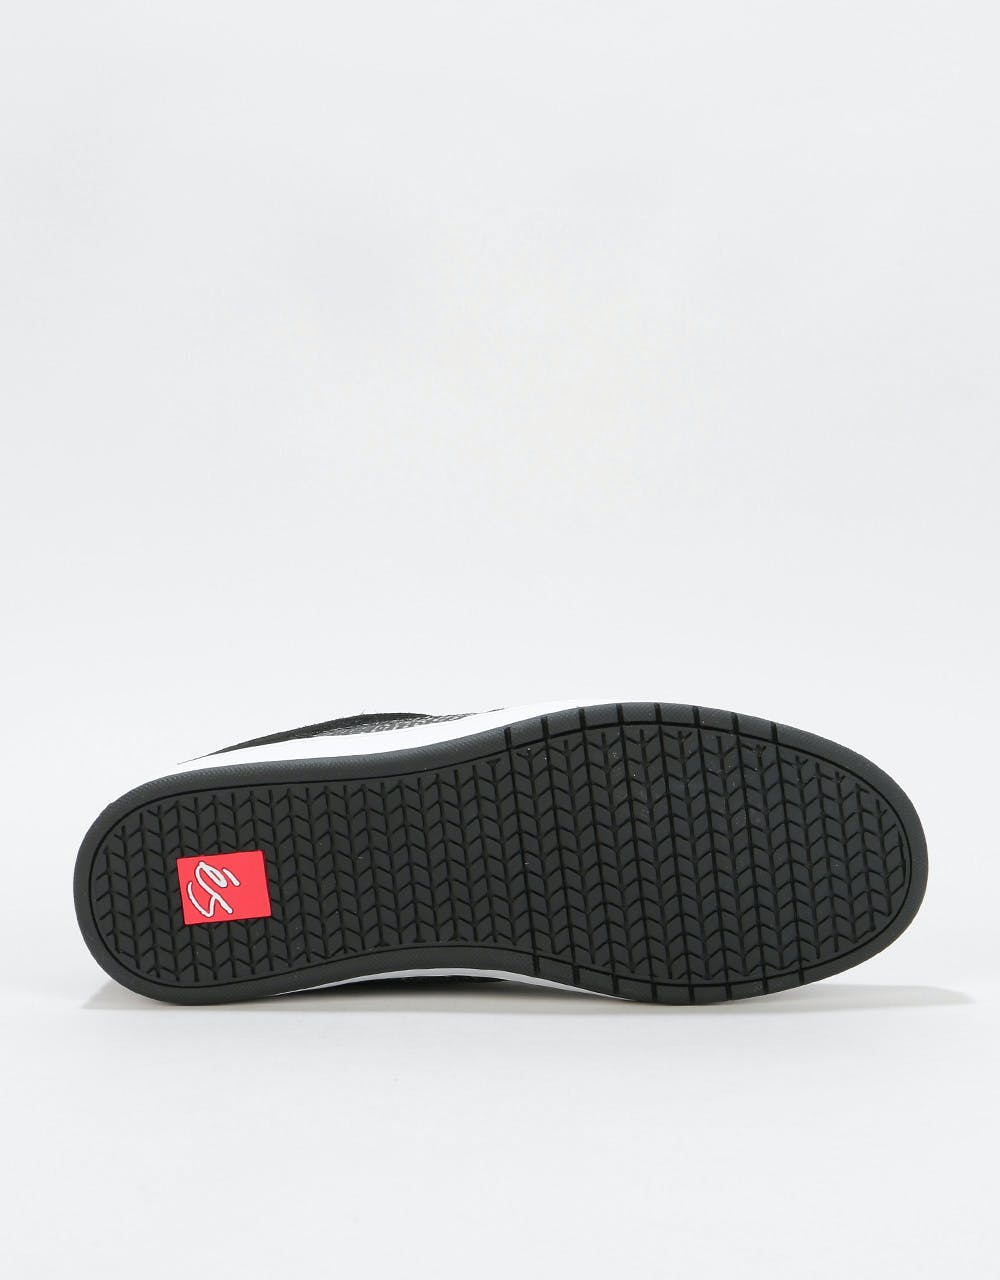 éS Accel Slim Skate Shoes - Black/Grey/White